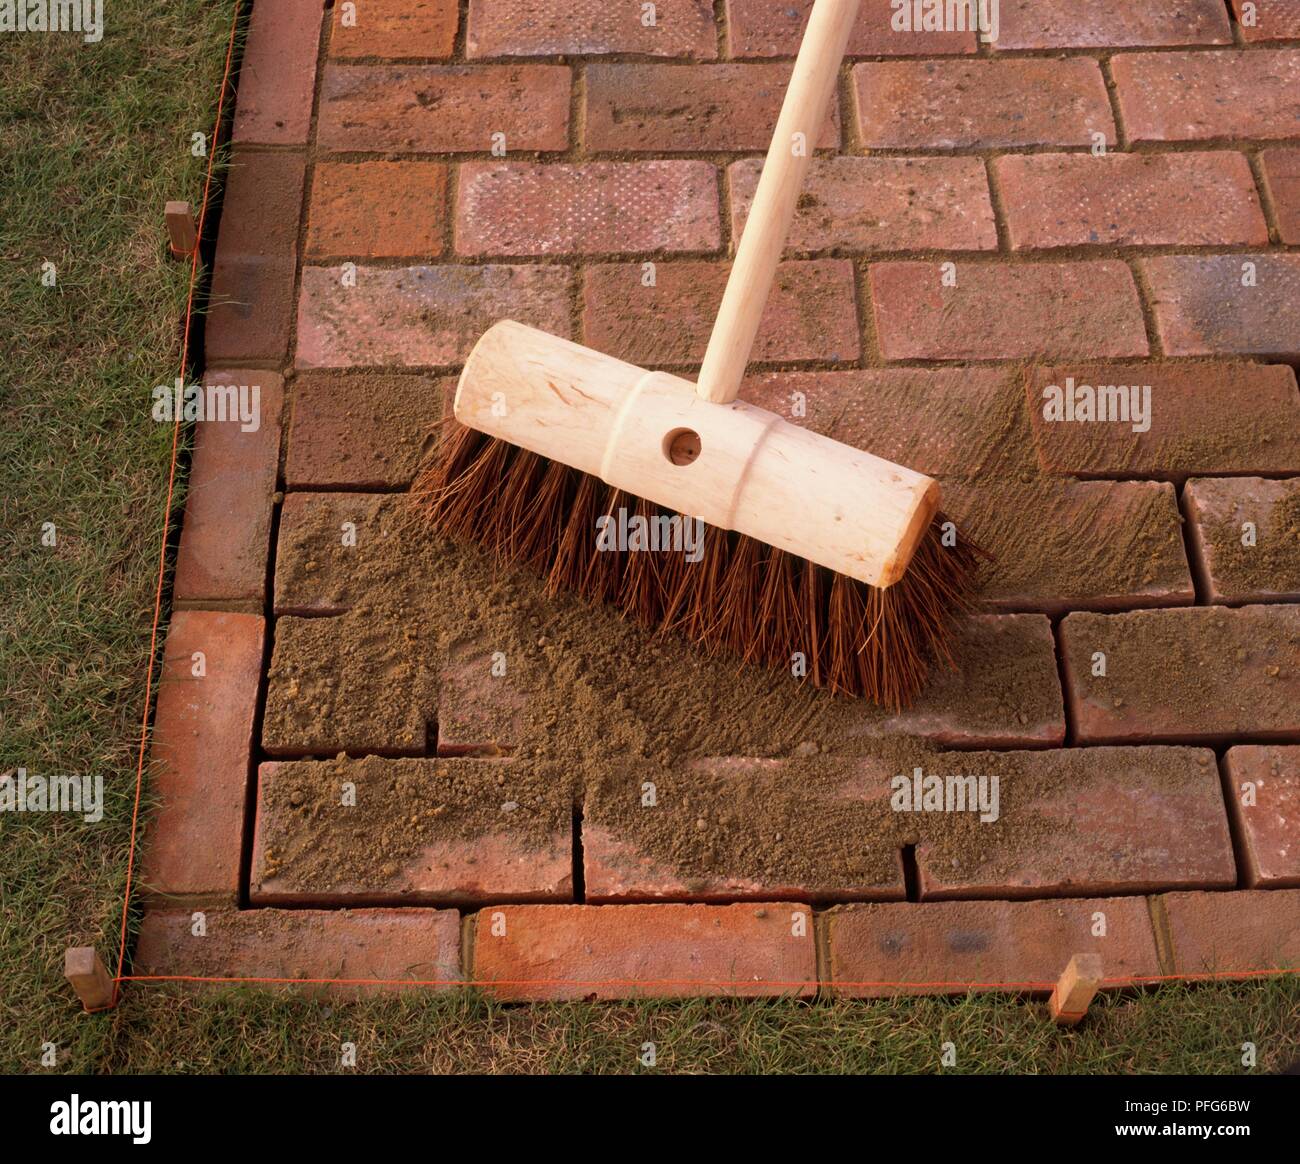 Brushing mortar into gaps between paving slabs, using a broom Stock Photo